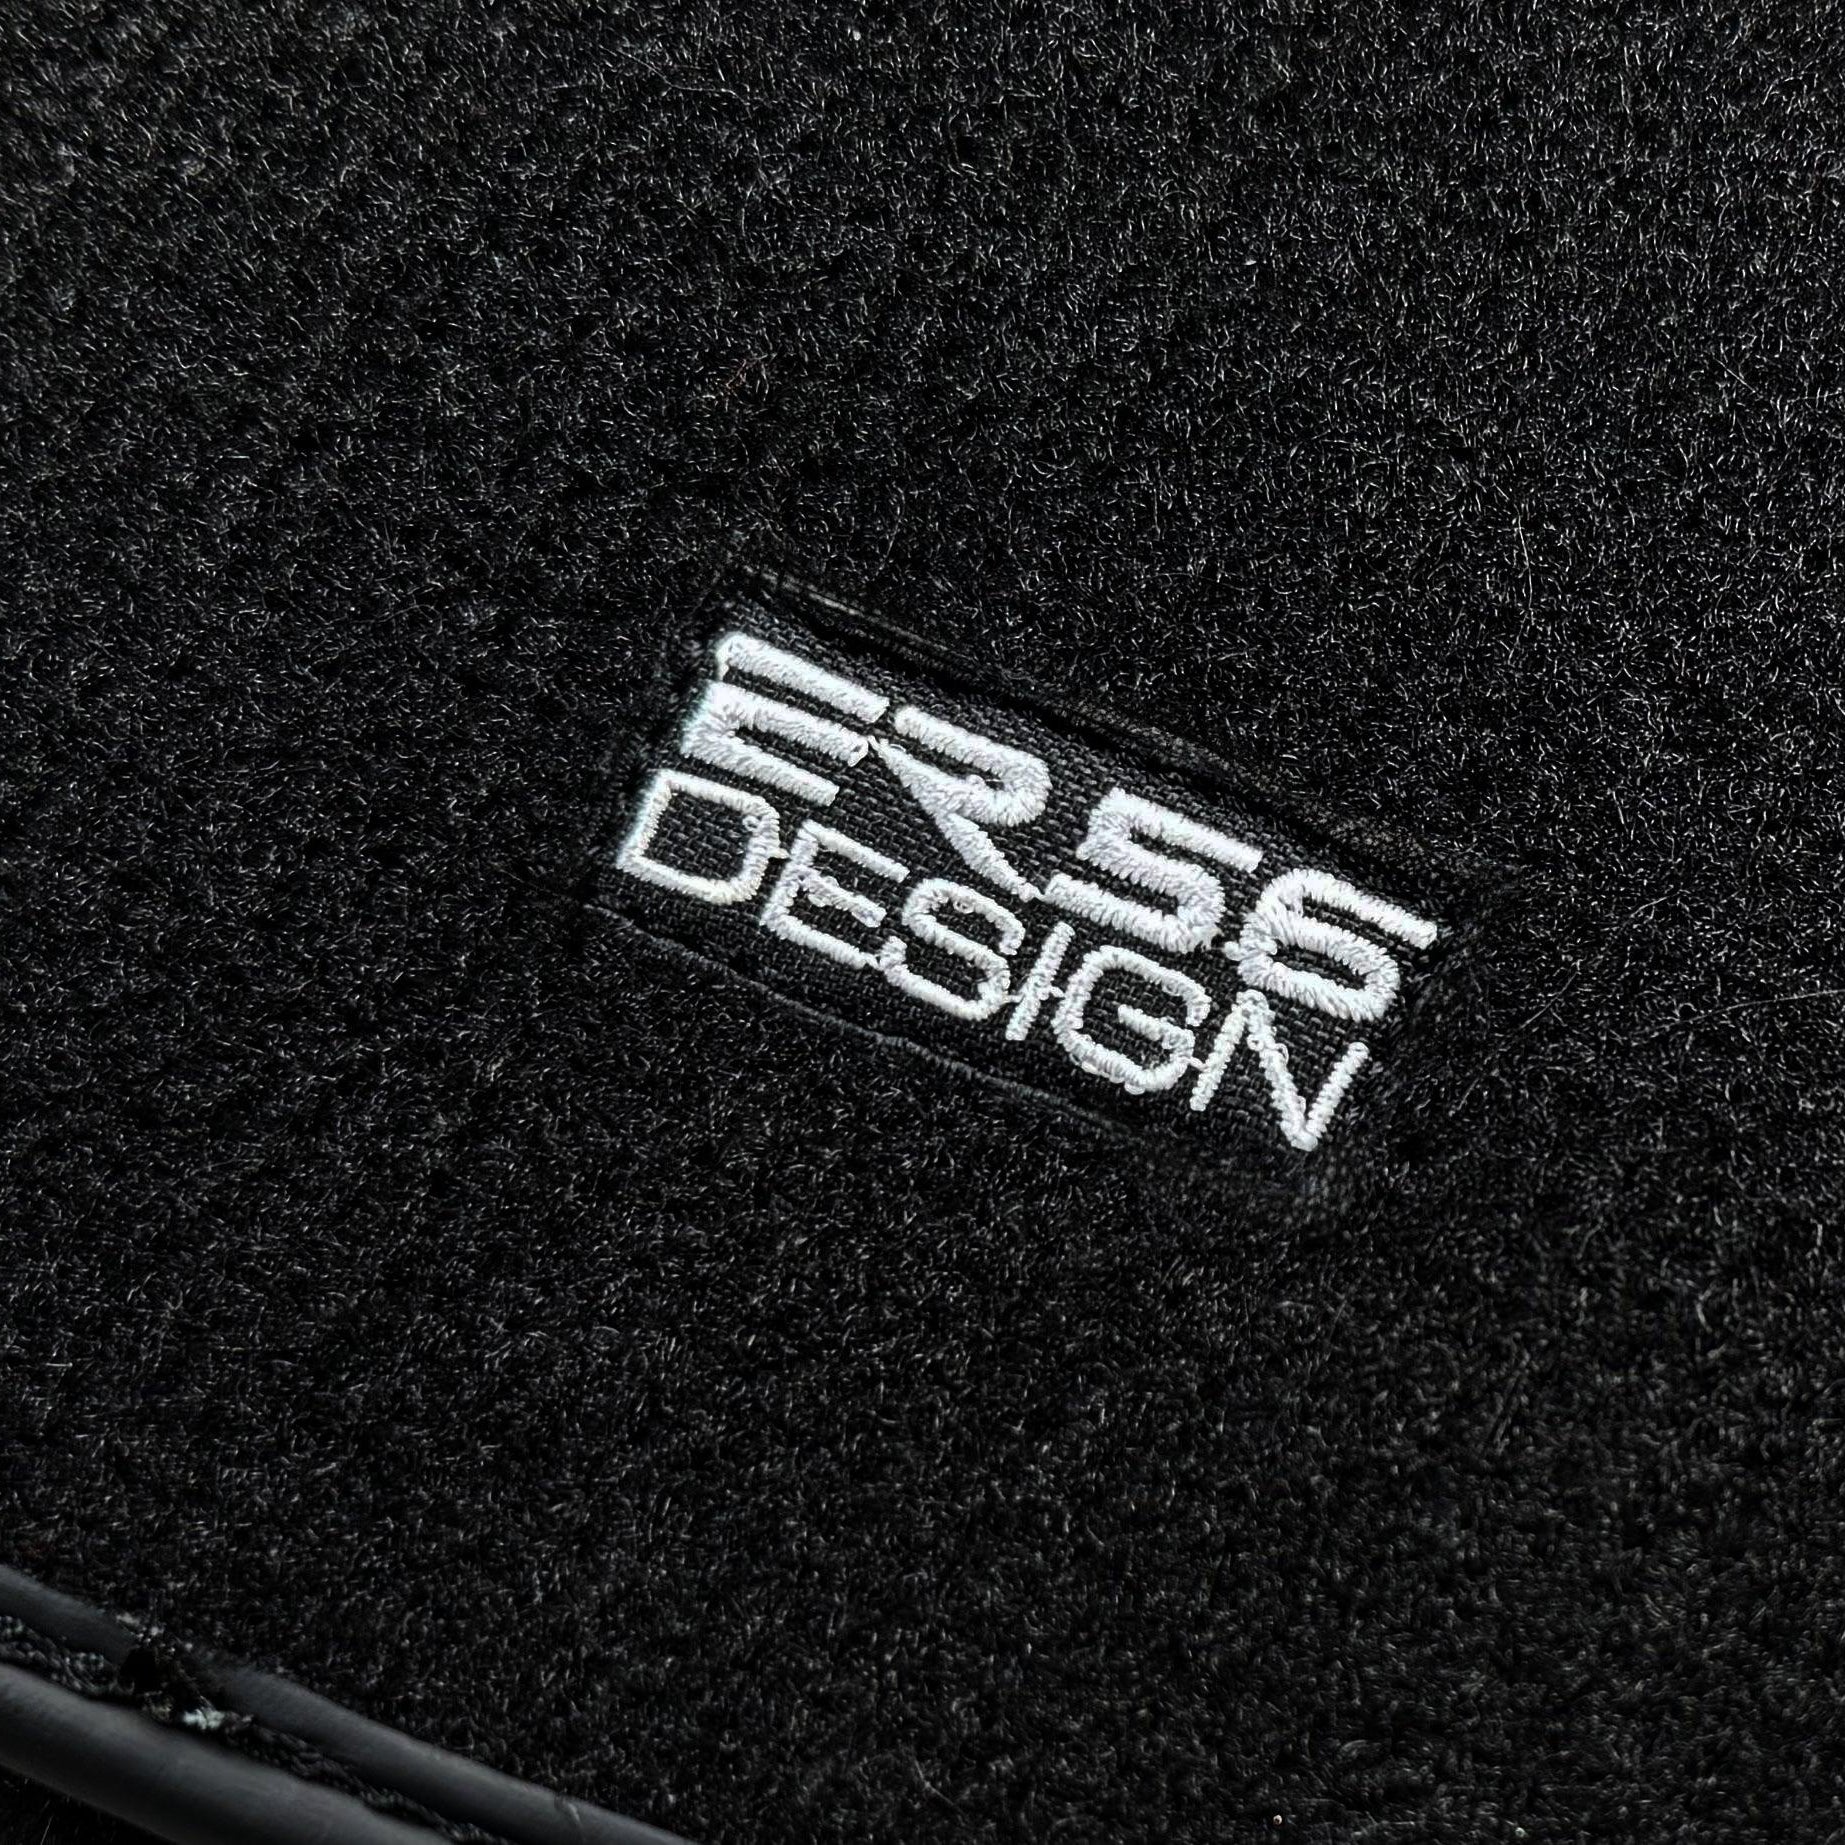 Black Sheepskin Floor Mats For BMW 3 Series E36 2-door Coupe ER56 Design